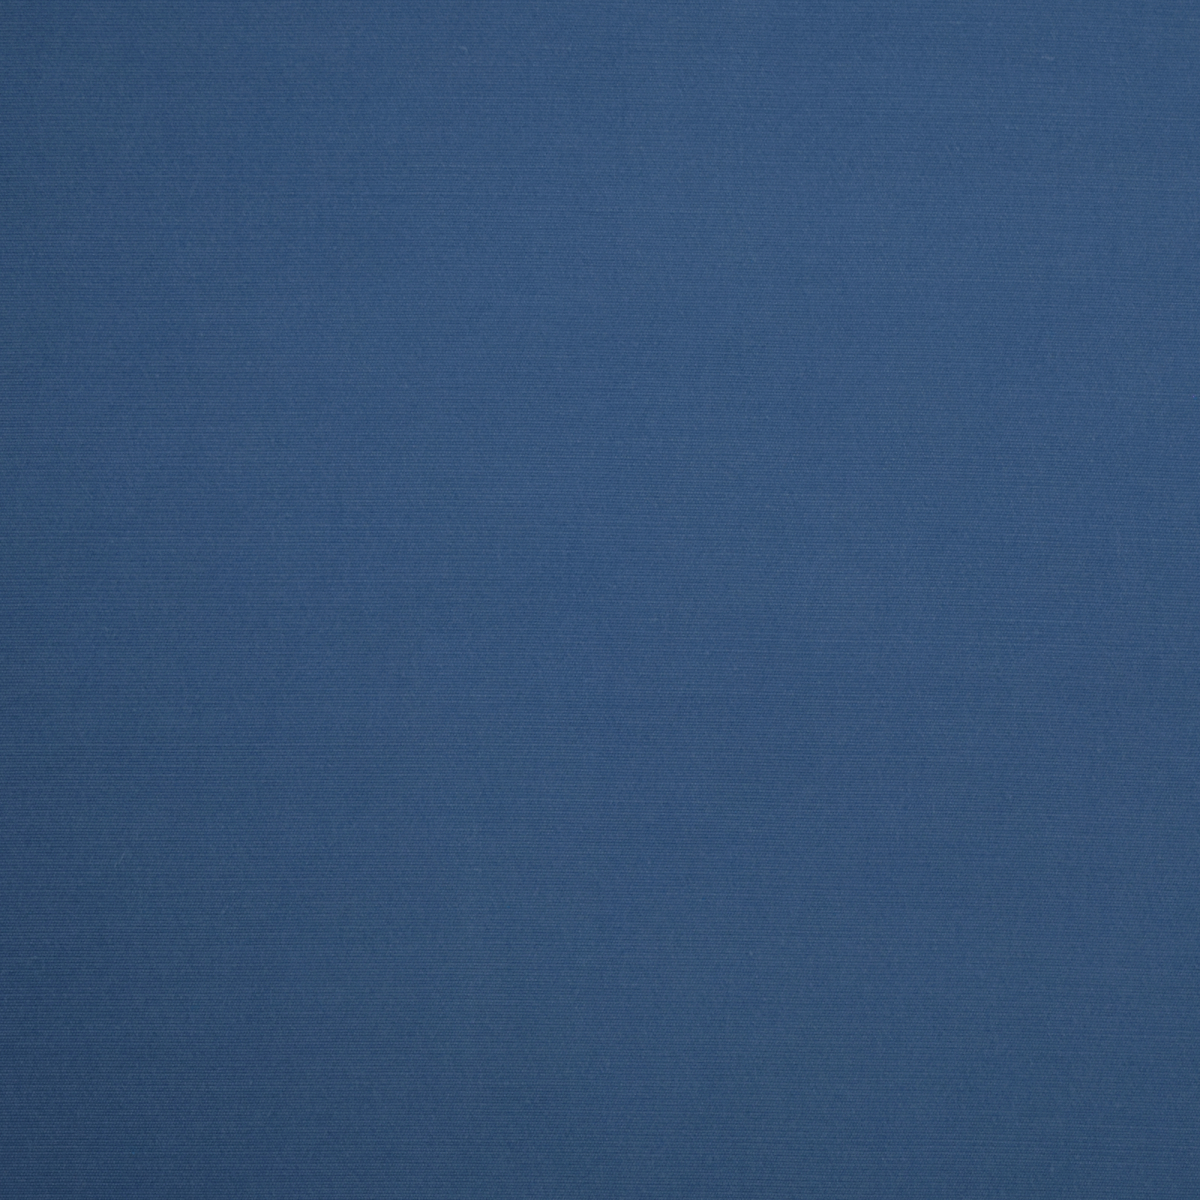 Fine Mesh Sheer Fabric (160 cms Width)- Marl Denim Blue Q1262